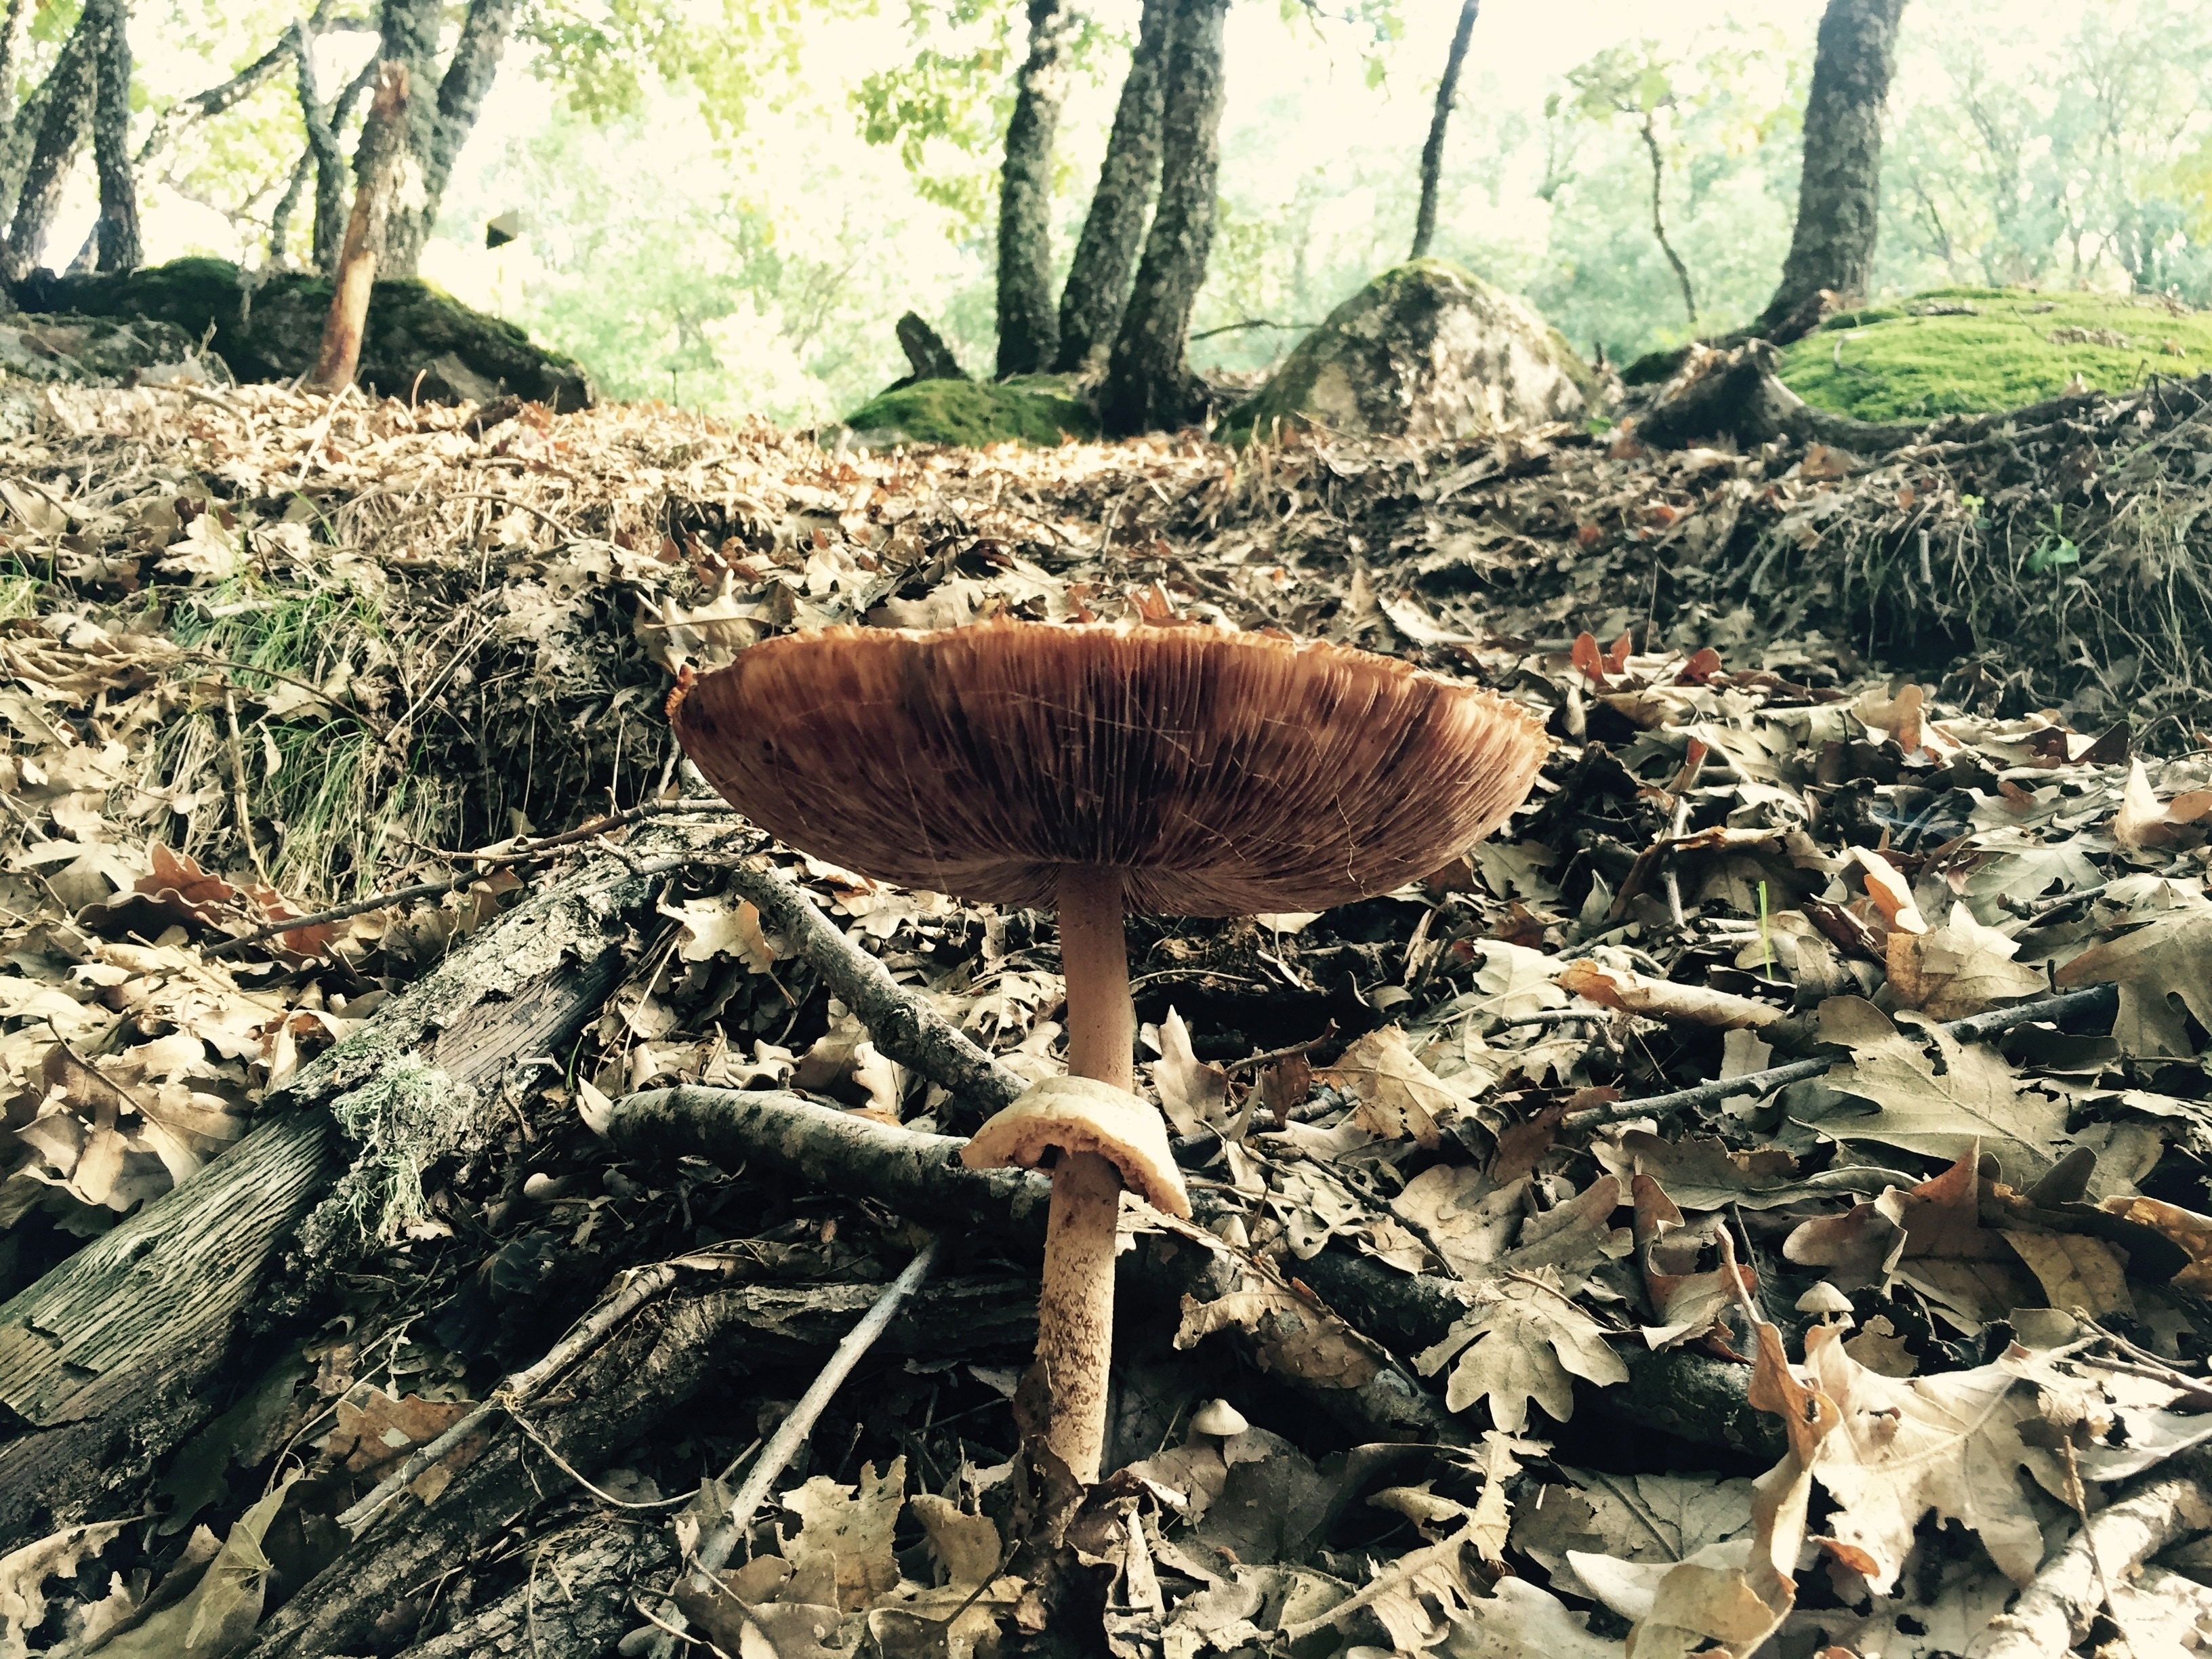 brown and grey mushroom